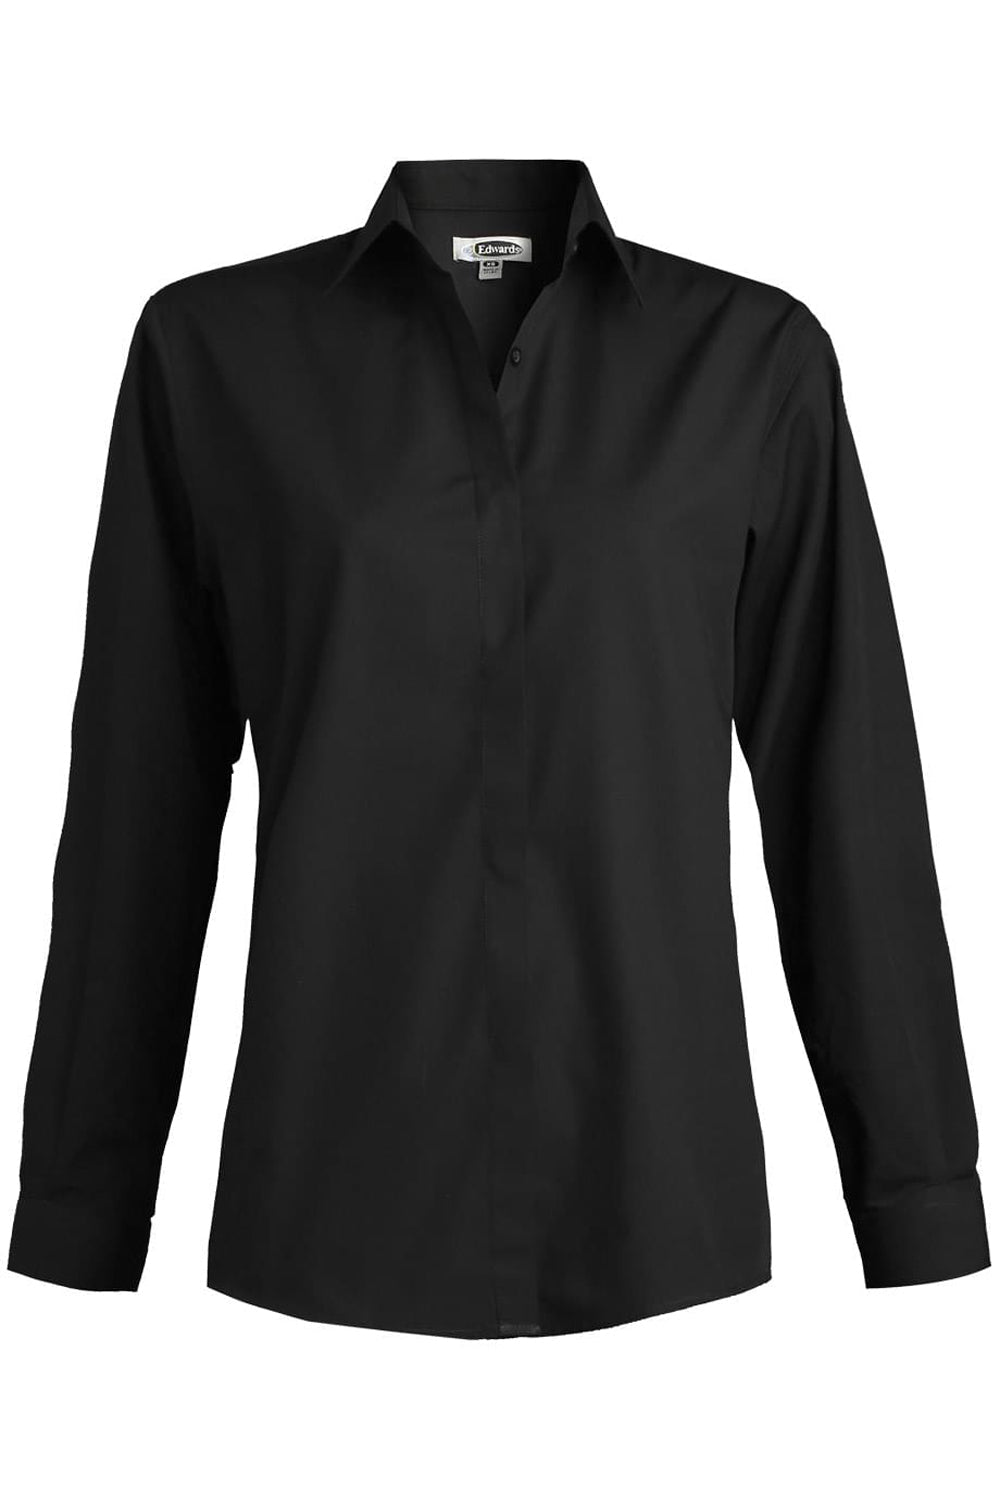 Edwards S Ladies' Café Broadcloth Shirt - Black